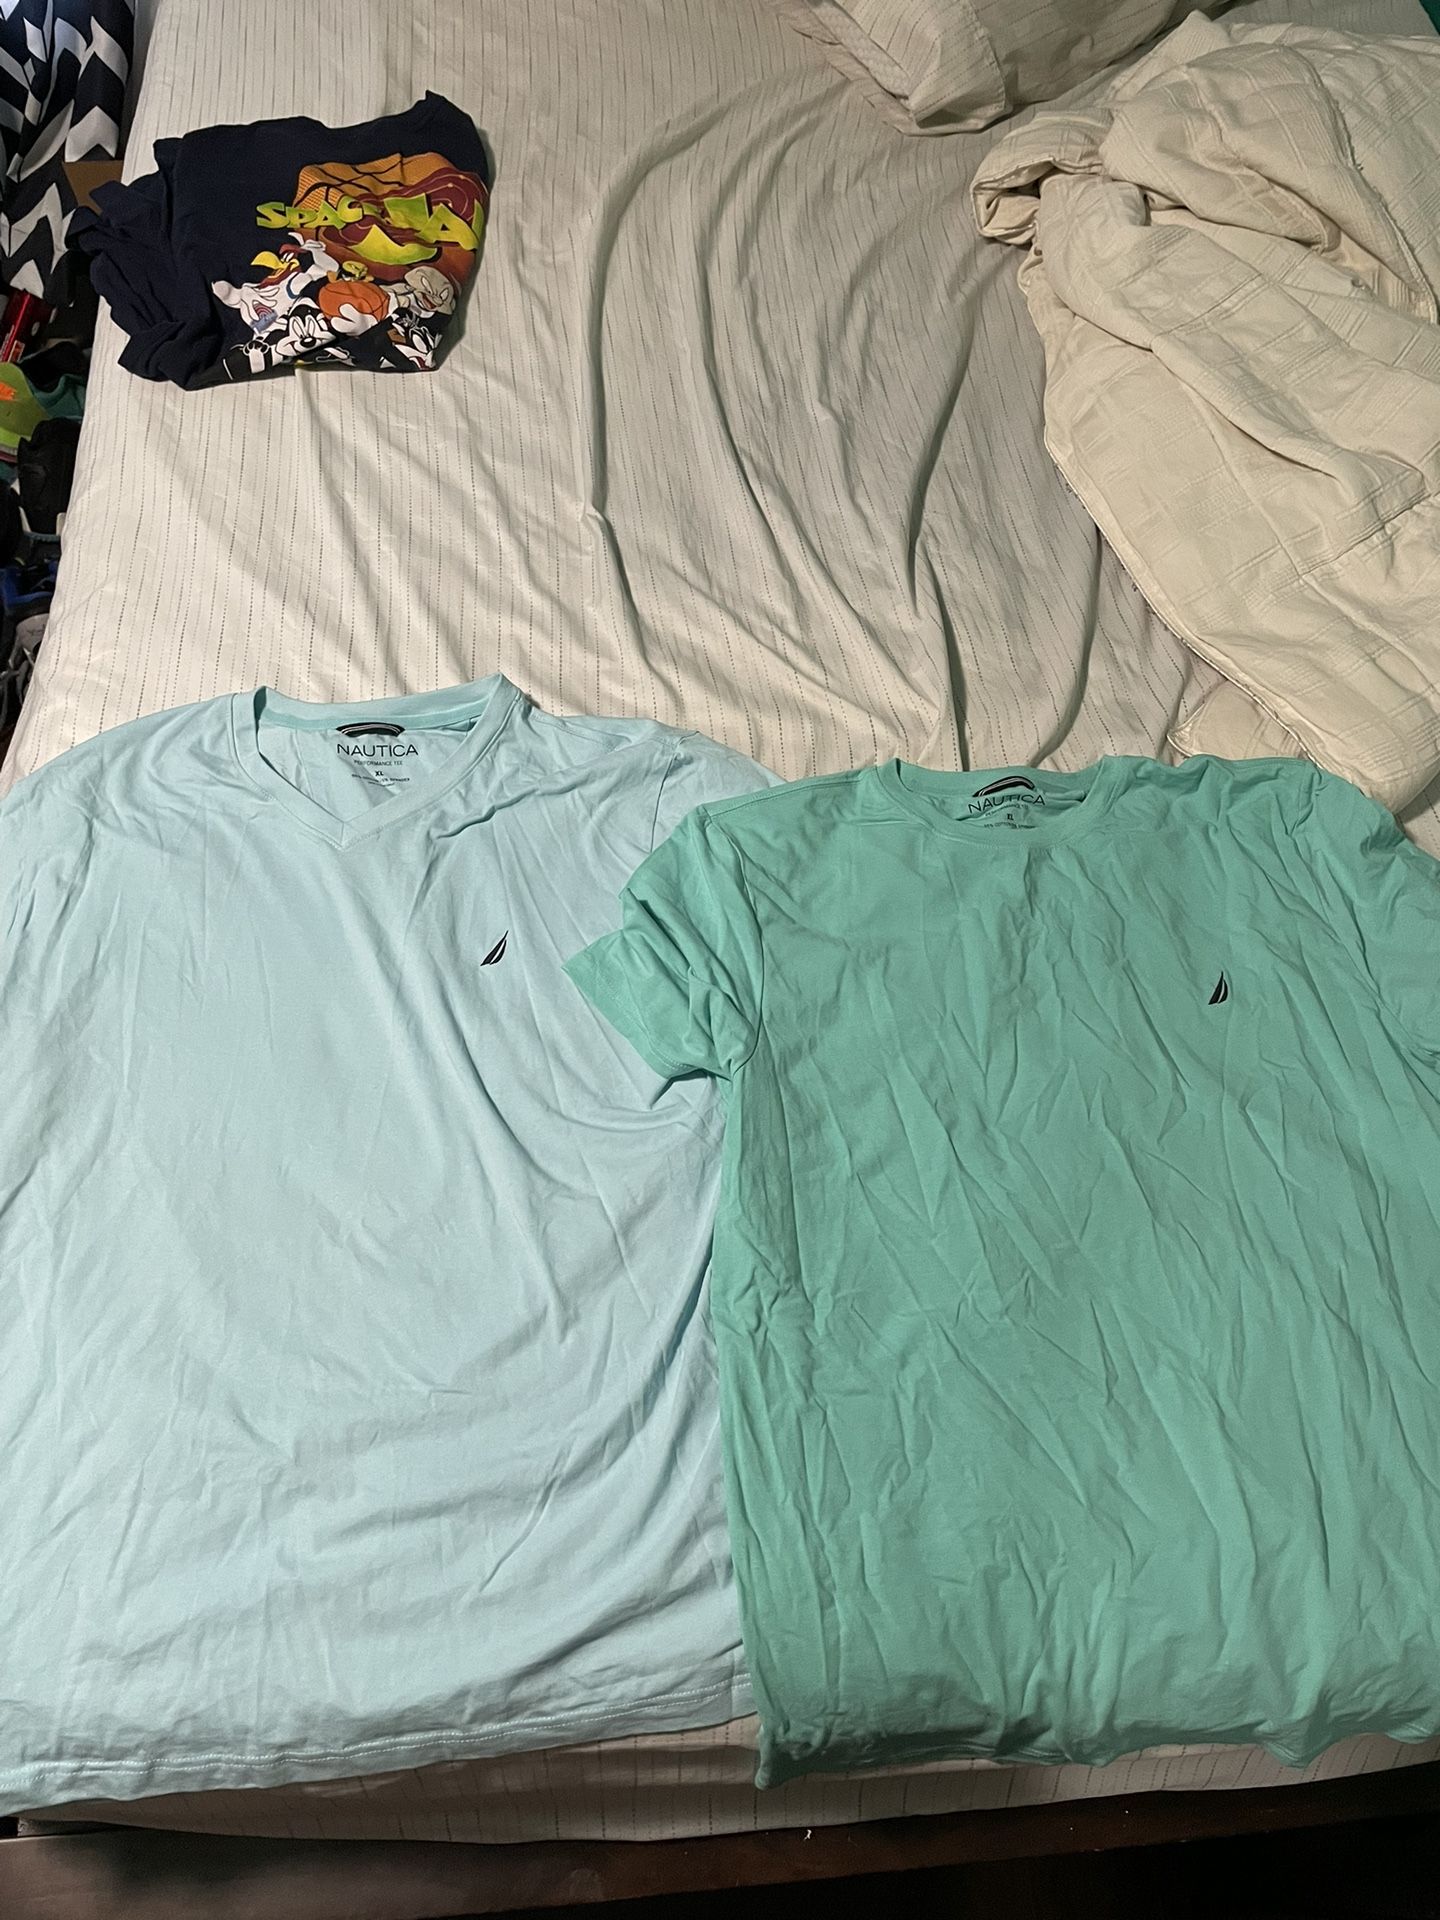 2 Nautica Shirts Size XL 